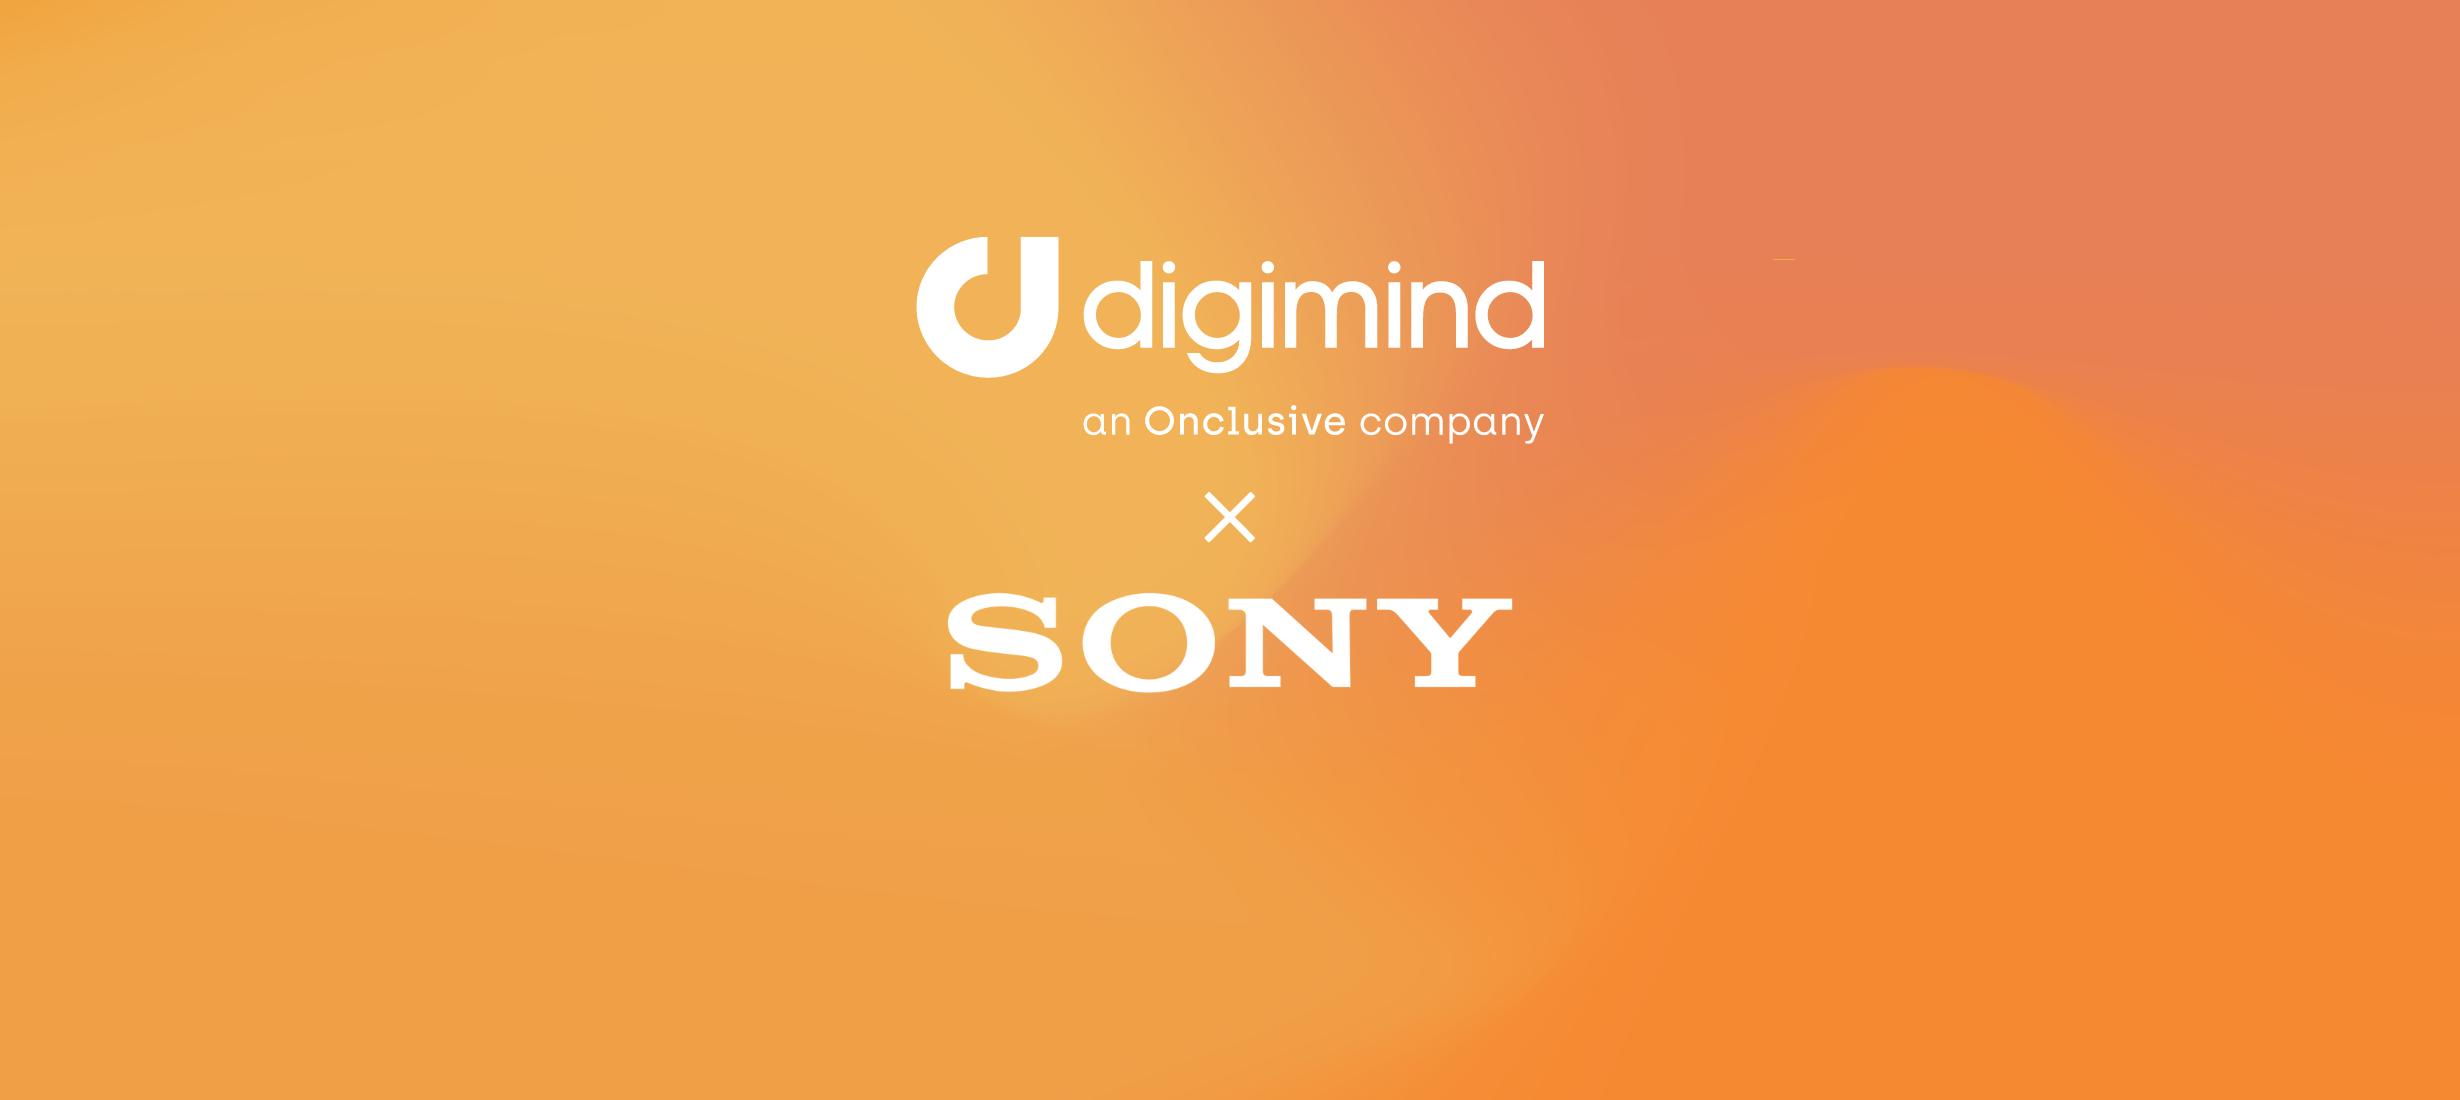 Digimind x Sony Corporation